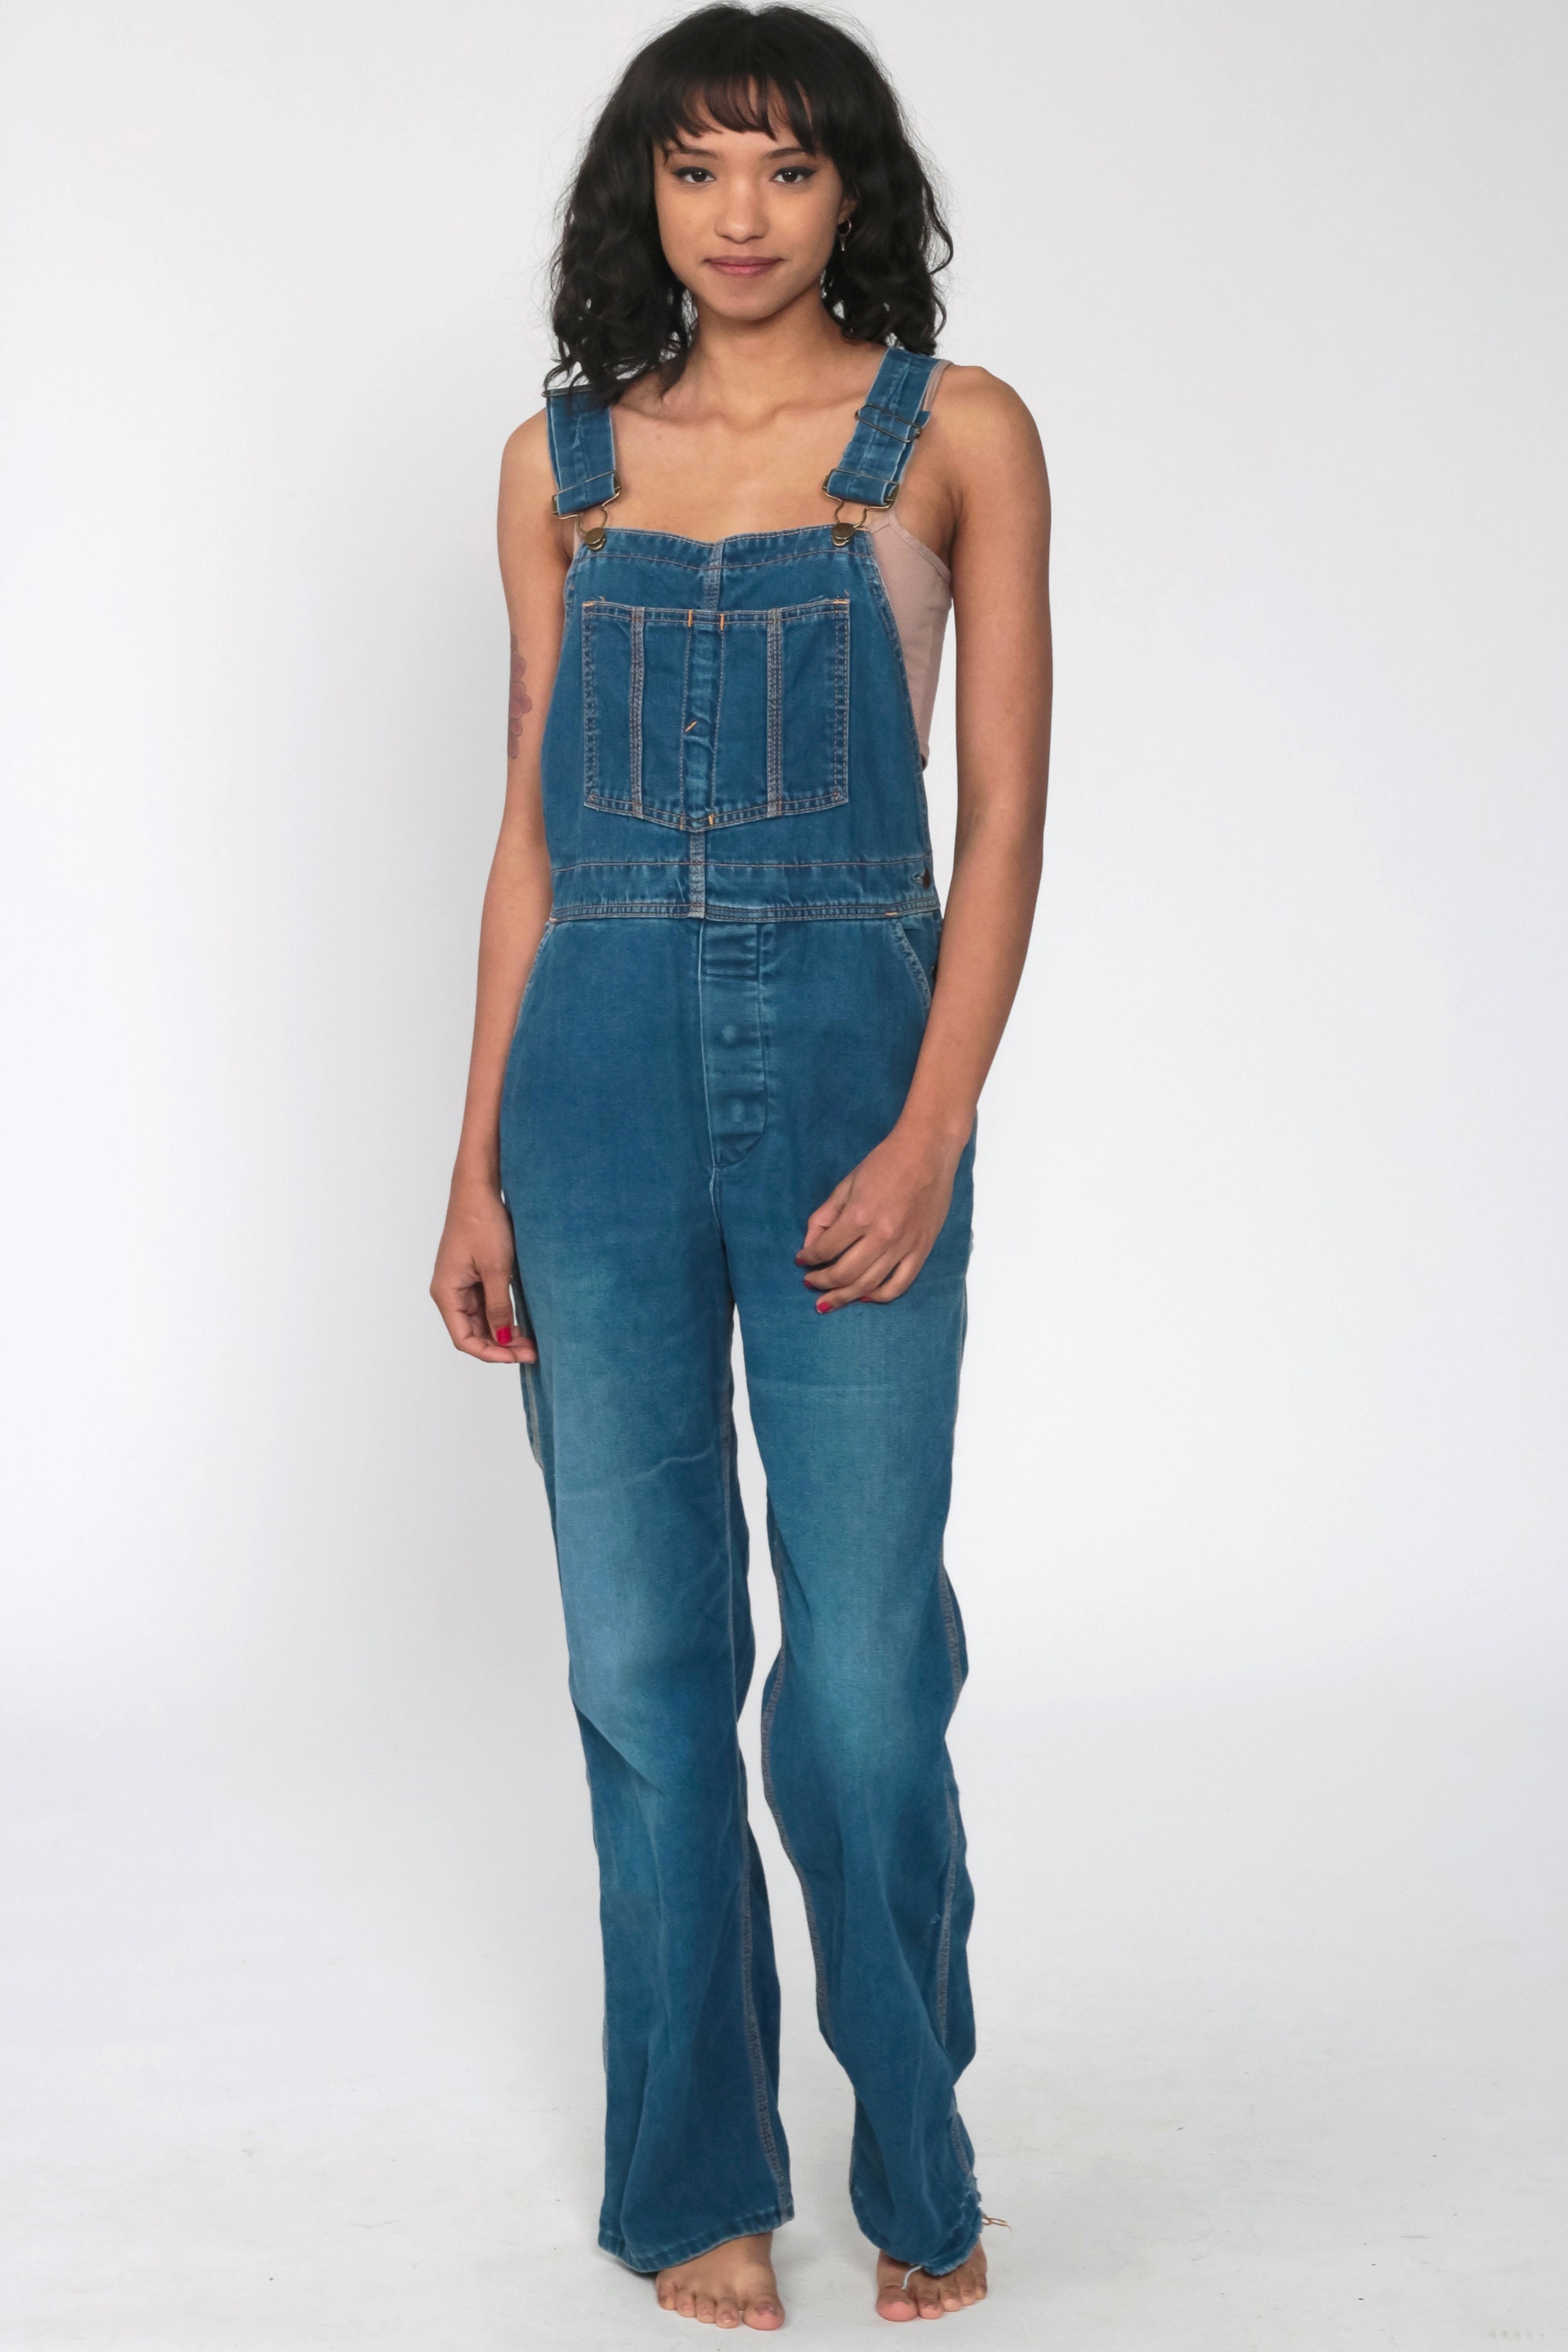 Denim Overalls Pants 80s Bib Overalls Jeans Workwear Overall Baggy ...